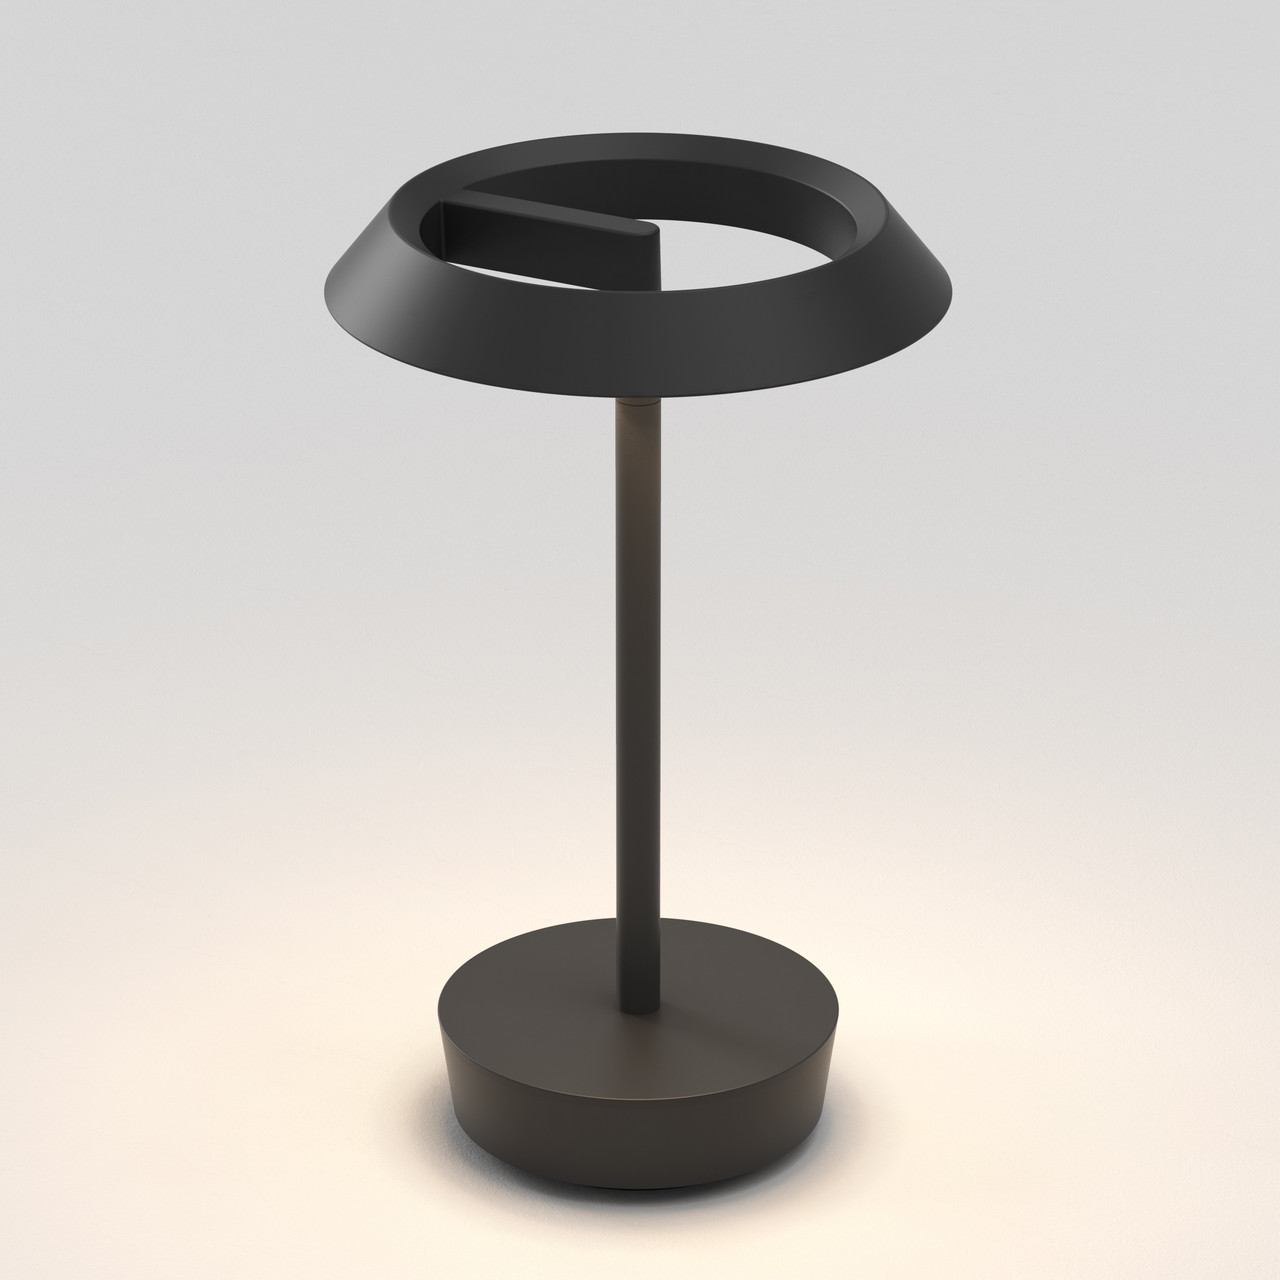 Halo Astro Lighting PortableTable Lamp in Black. Mochrome Lighting.